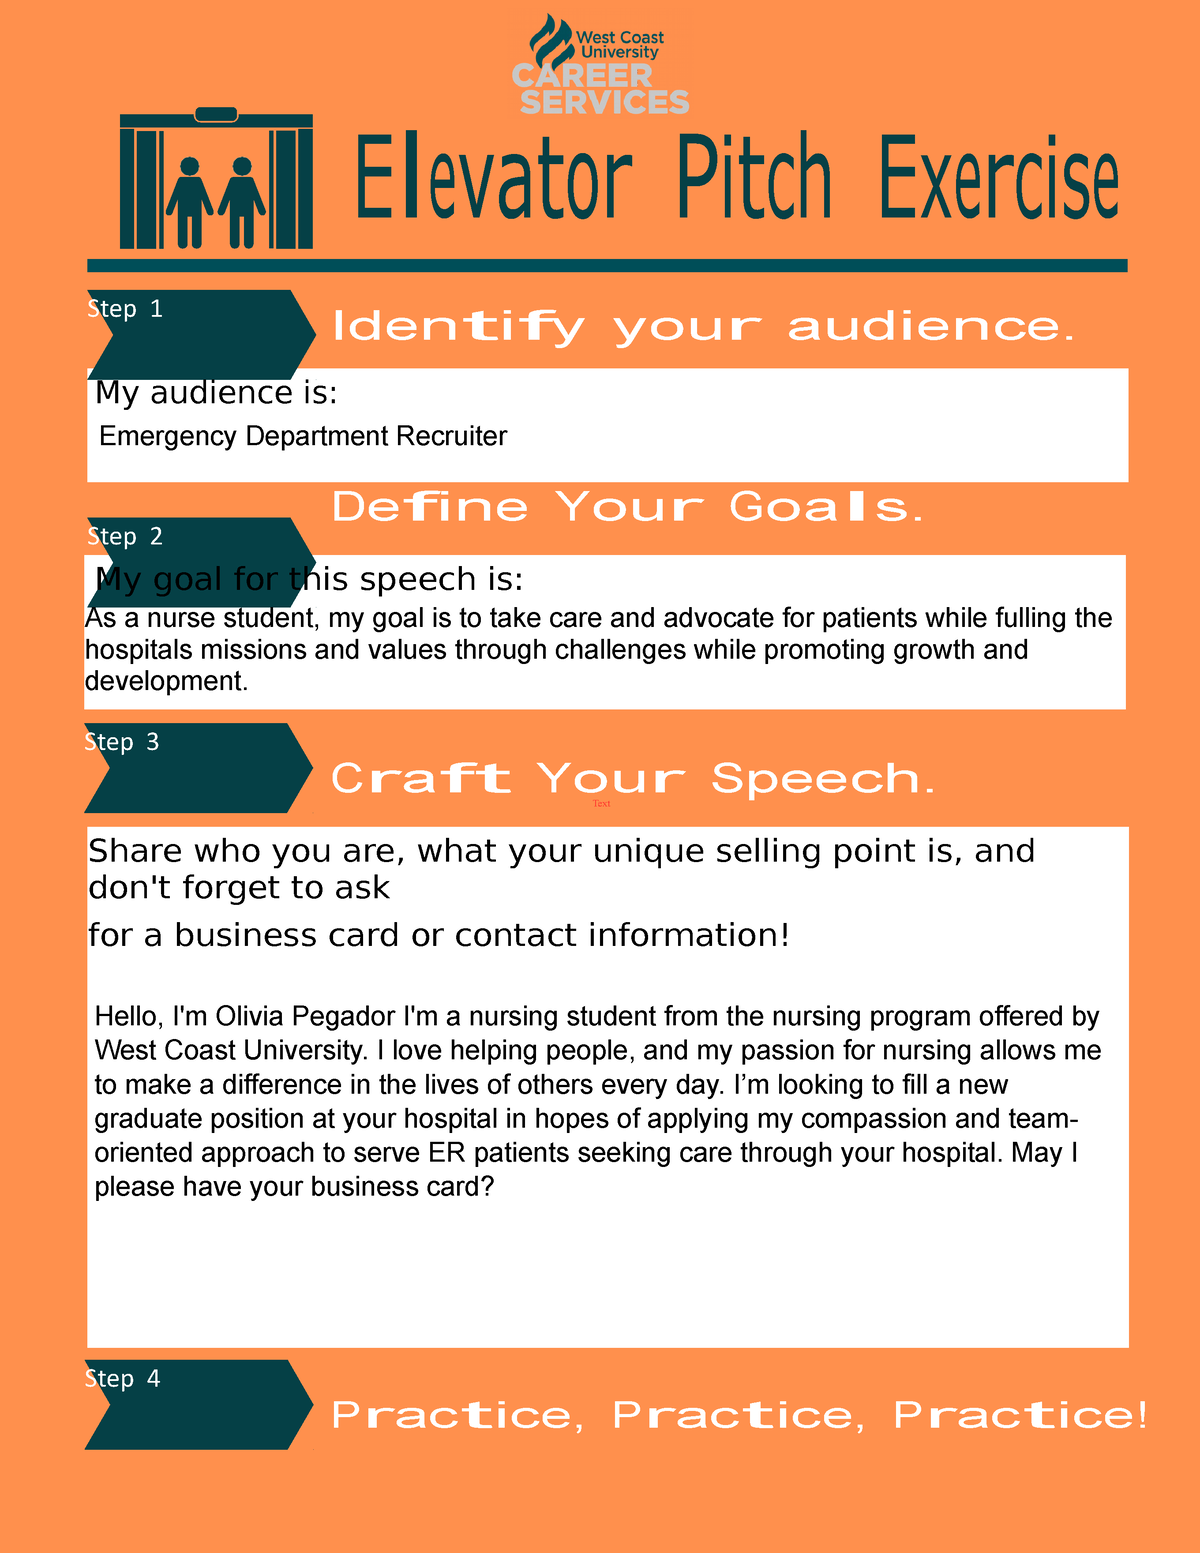 Elevator Pitch Exercise Sheet 497 - Elevator Pitch Exercise Identify ...